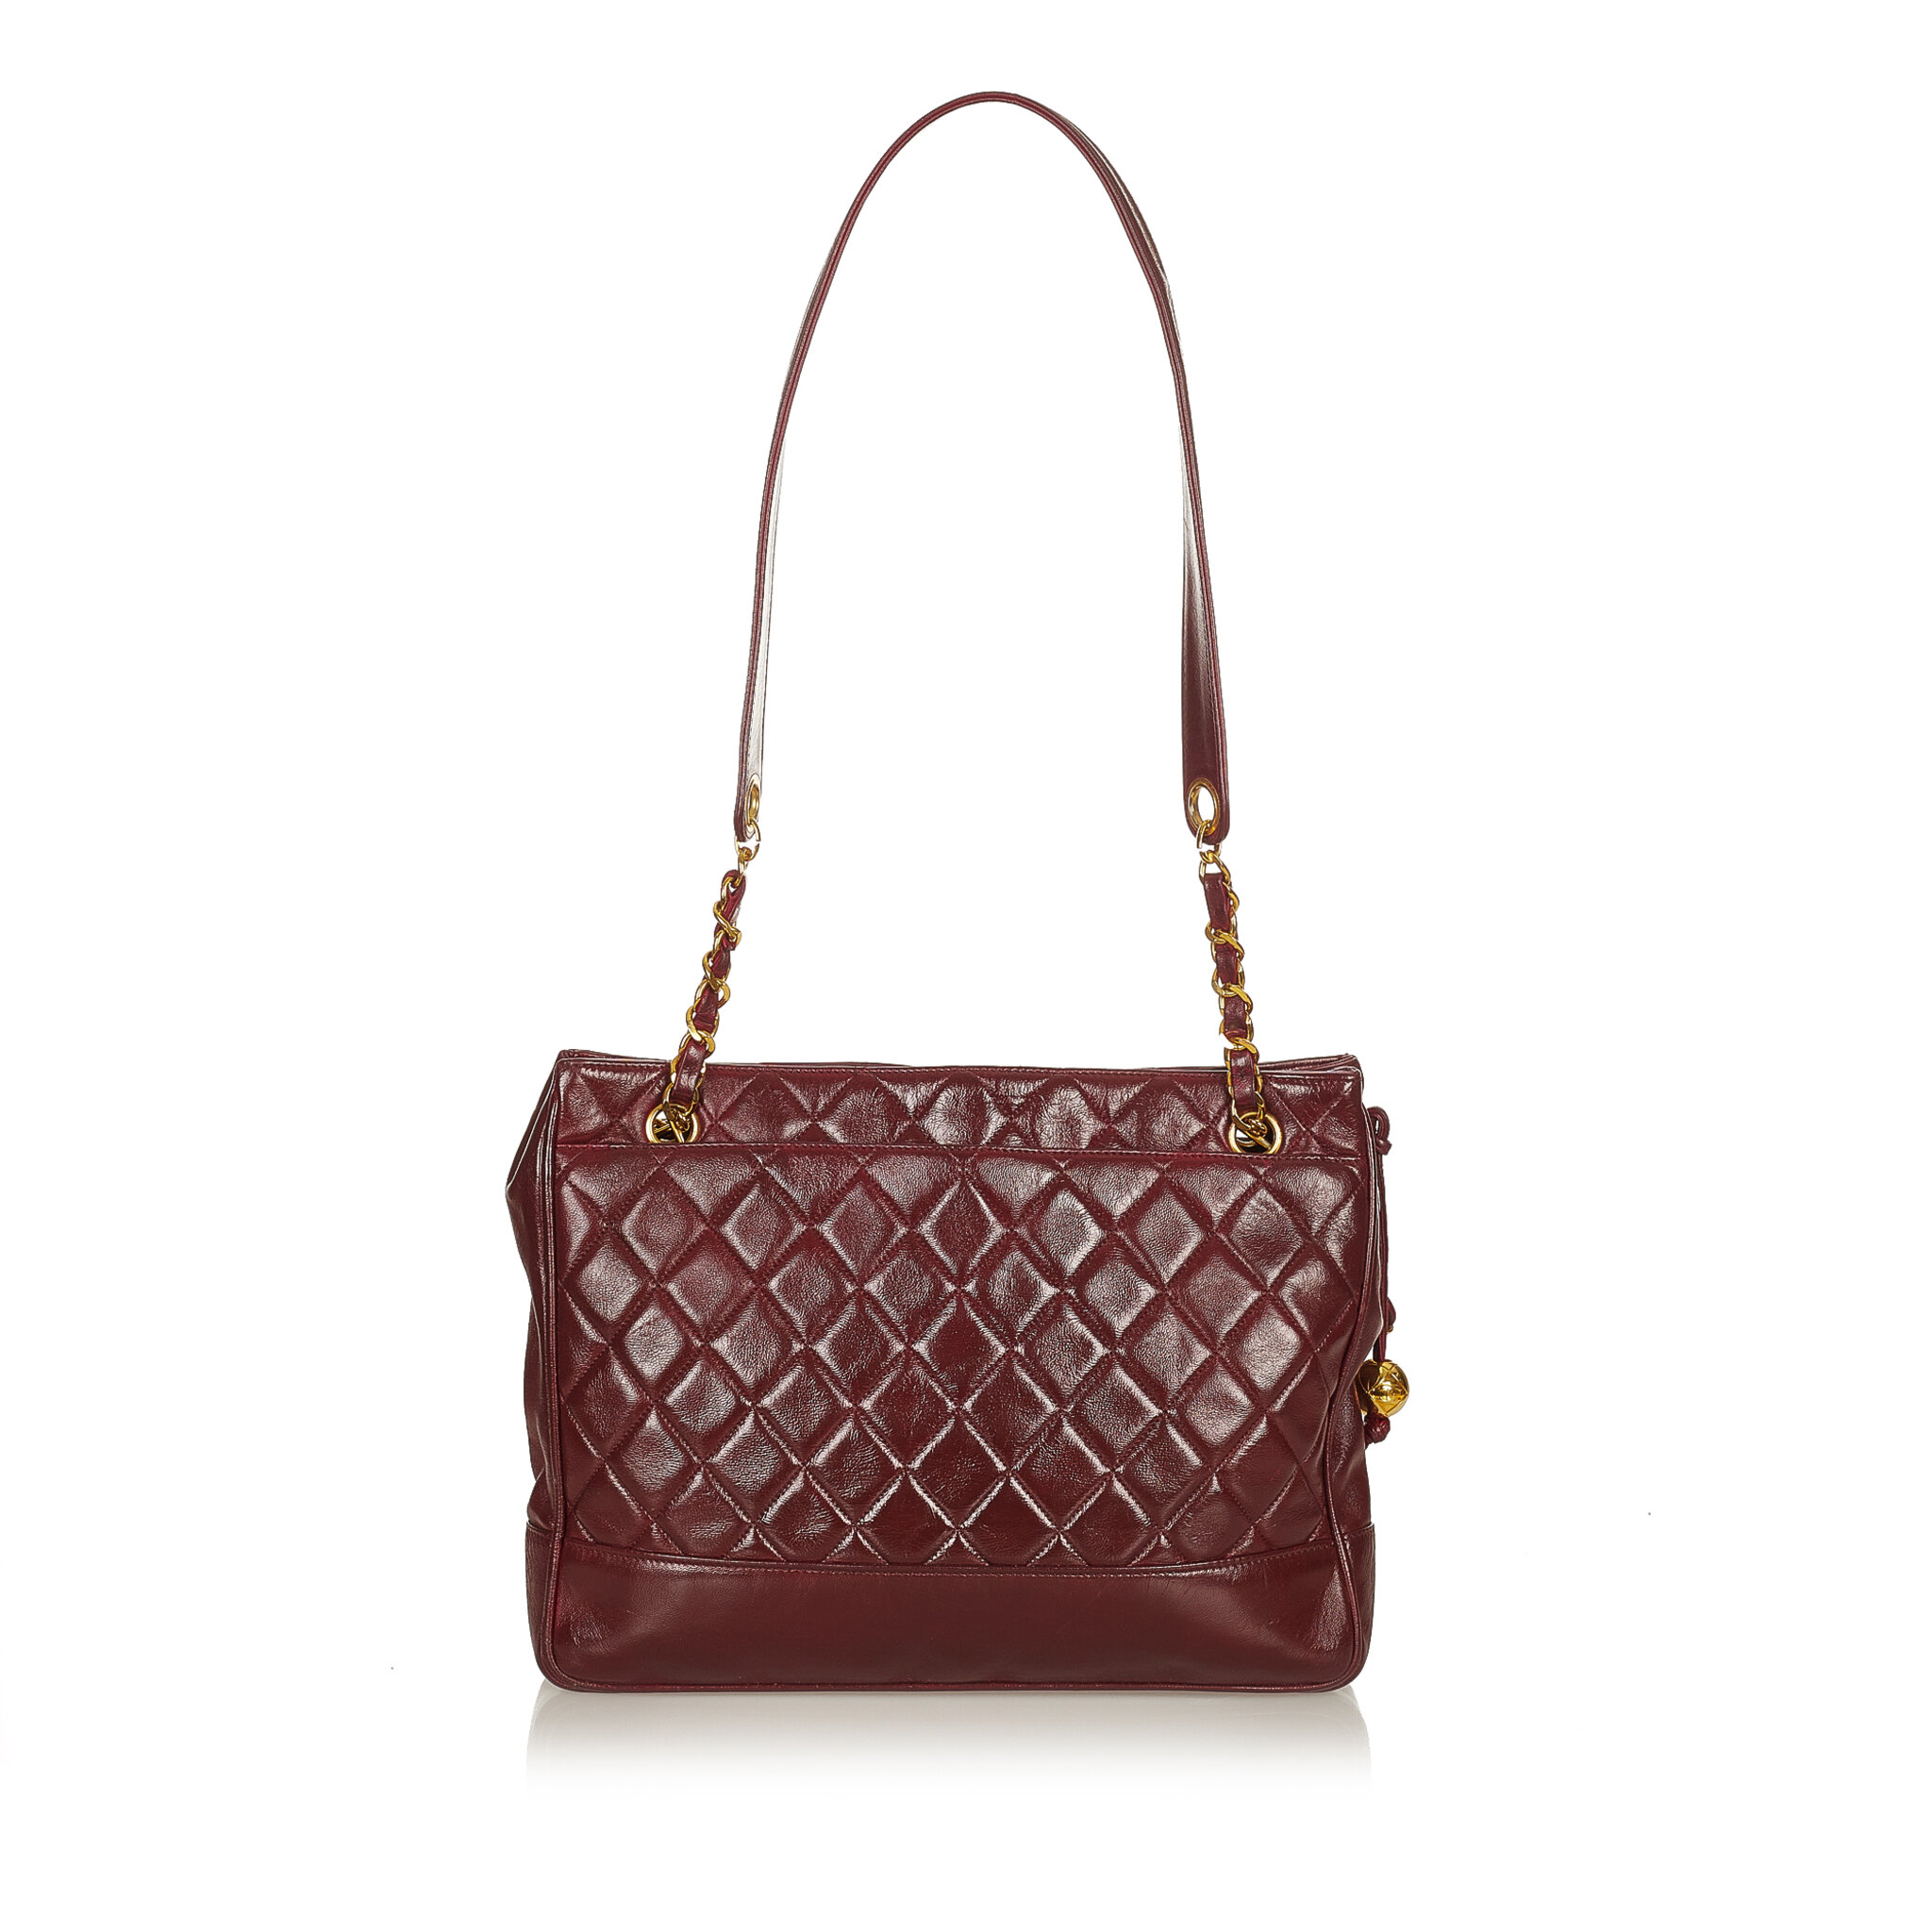 Chanel Matelasse Lambskin Leather Shoulder Bag, ONESIZE, bordeaux